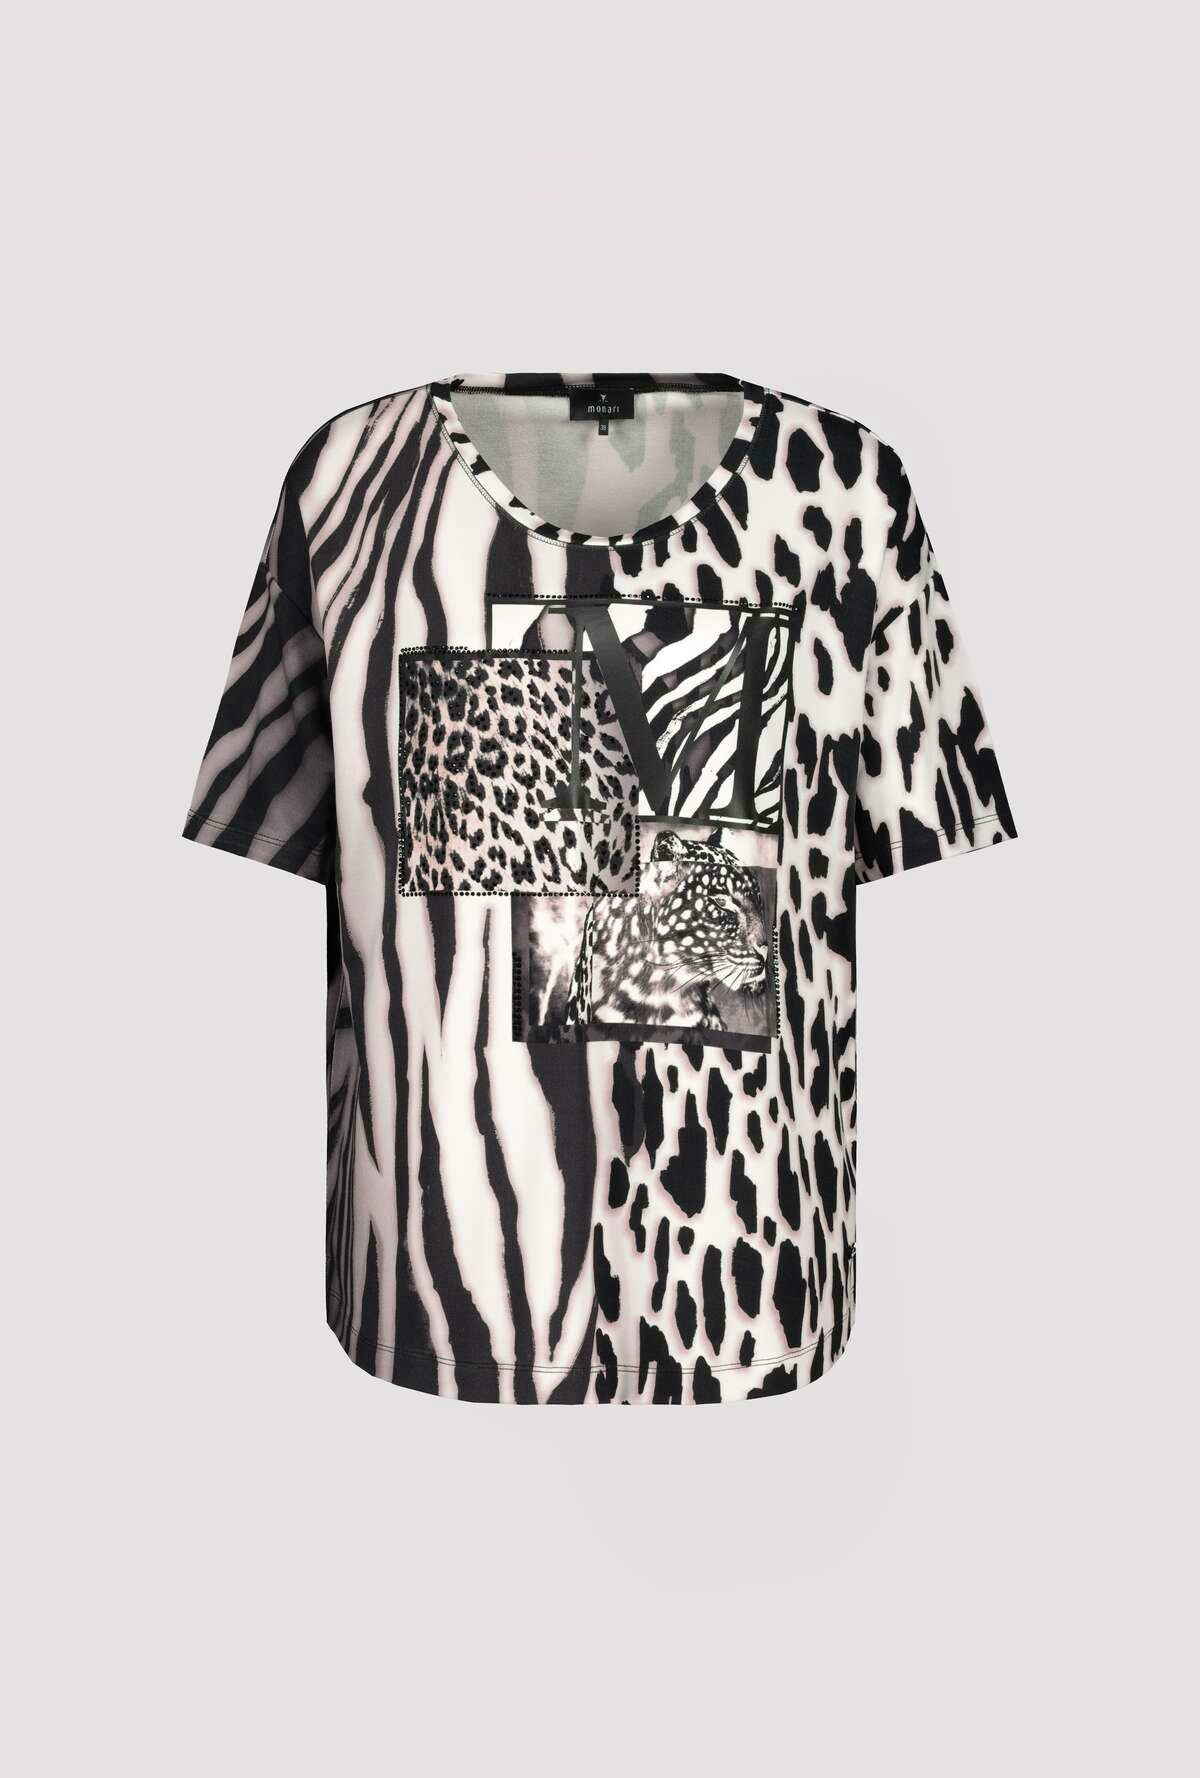 Monari Shirt Animal Print schwarz weiß